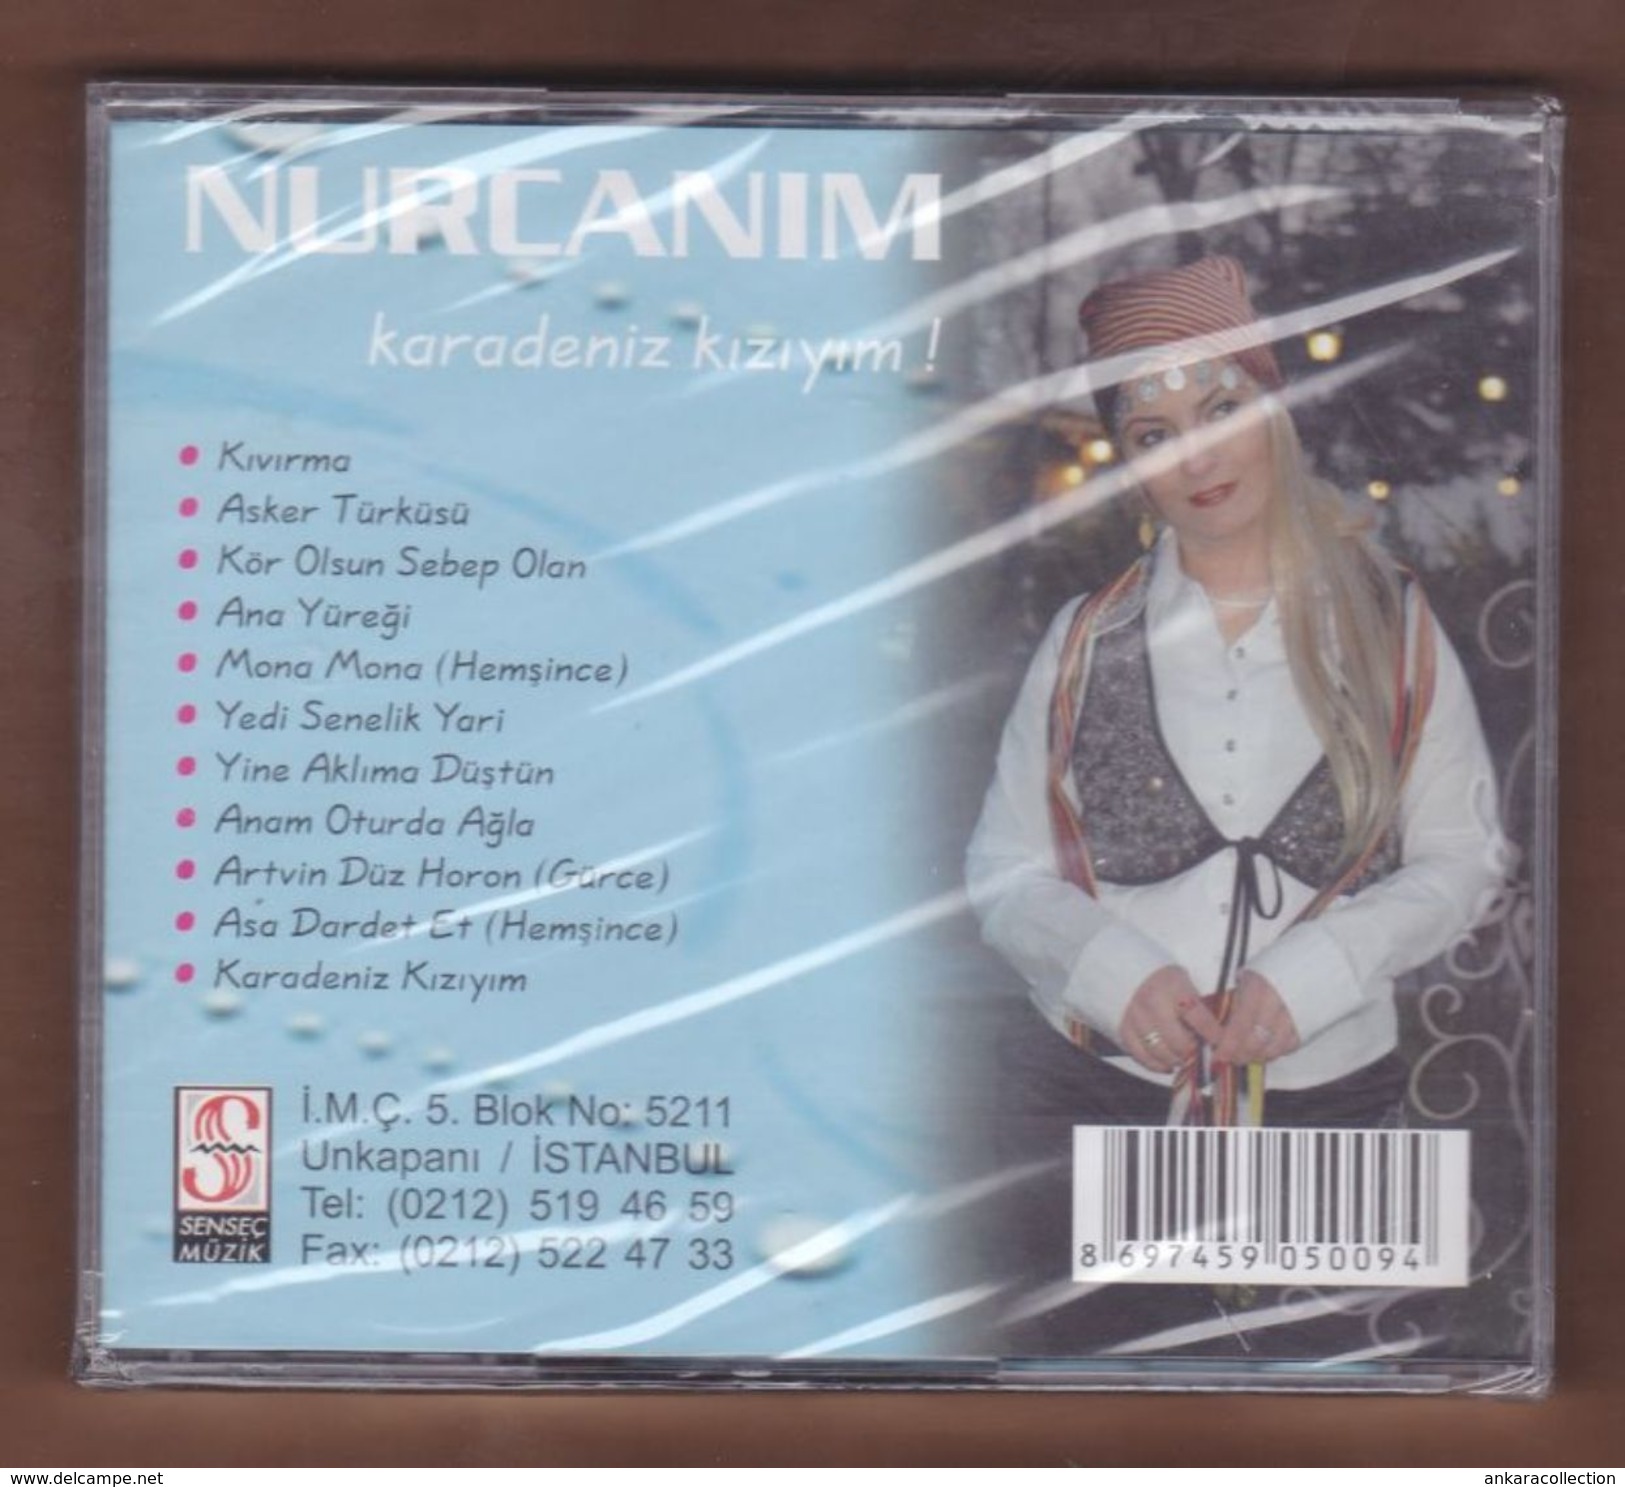 AC -  Nurcanım Karadeniz Kızıyım BRAND NEW TURKISH MUSIC CD - World Music